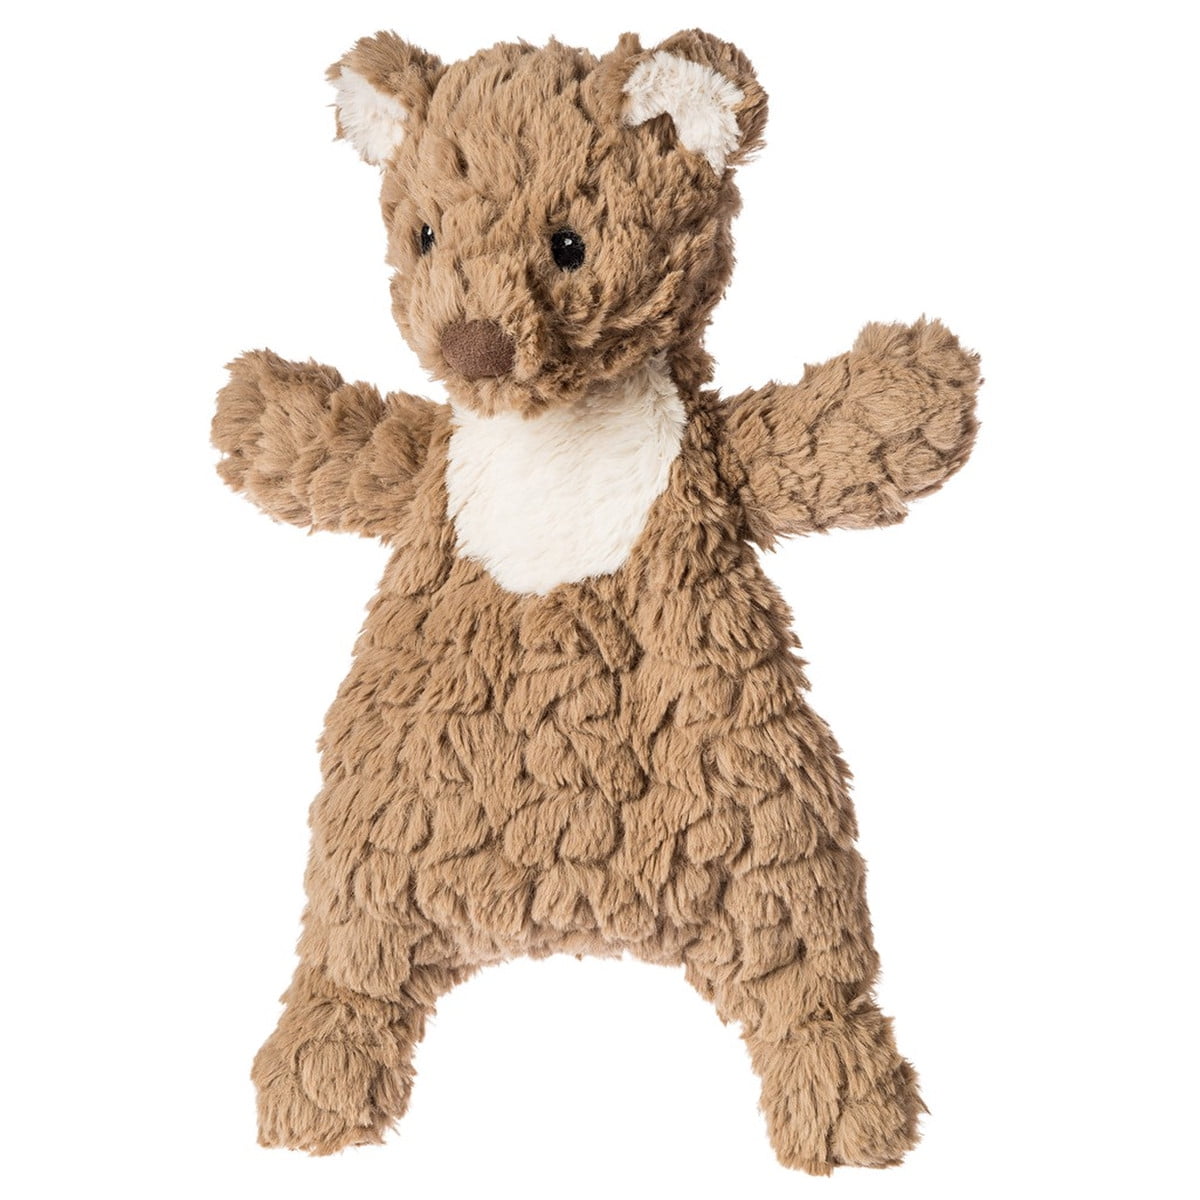 LotFancy Teddy Bear Stuffed Animals, 20 inch Soft Cute Teddy Bear Plush Toy  for Kids Baby Toddlers